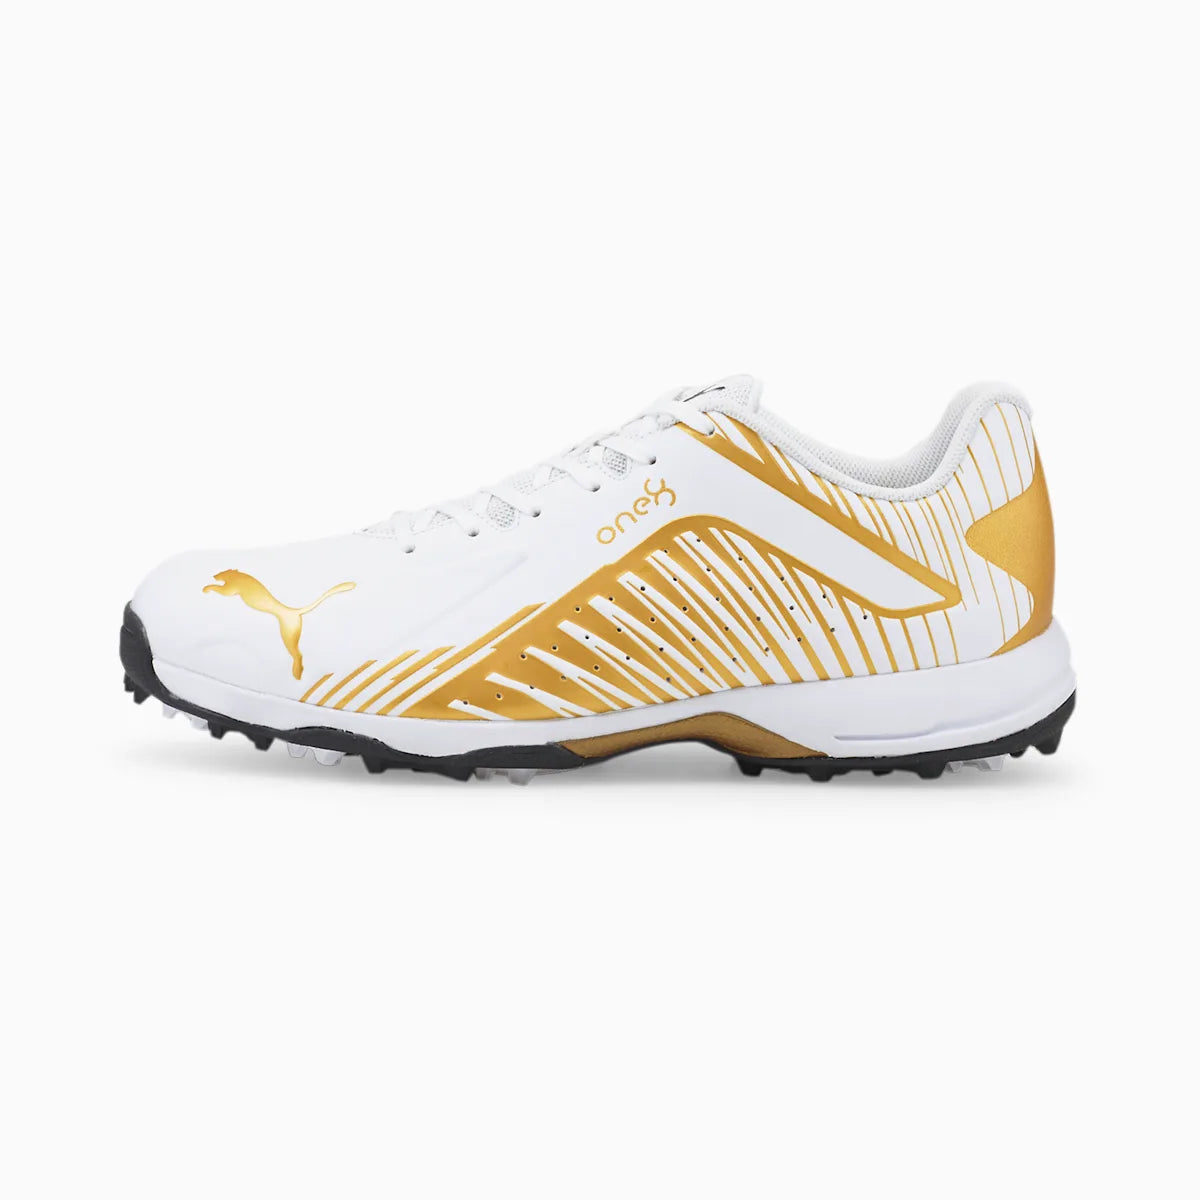 Puma Men VK One8 22FH Rubber White & Gold Cricket Shoes